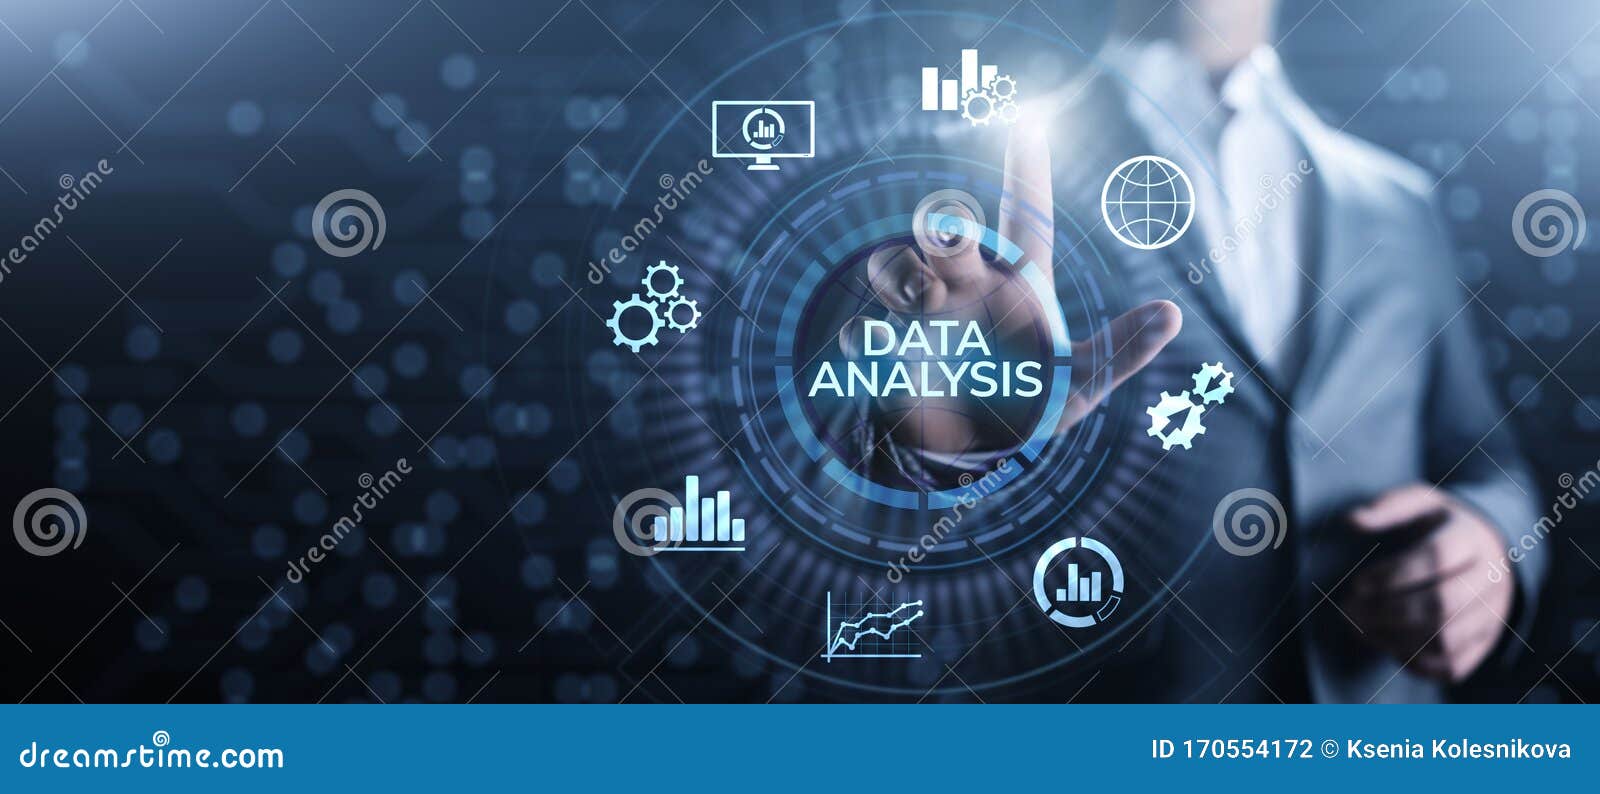 Data Analysis Business Intelligence Analytics Internet Technology